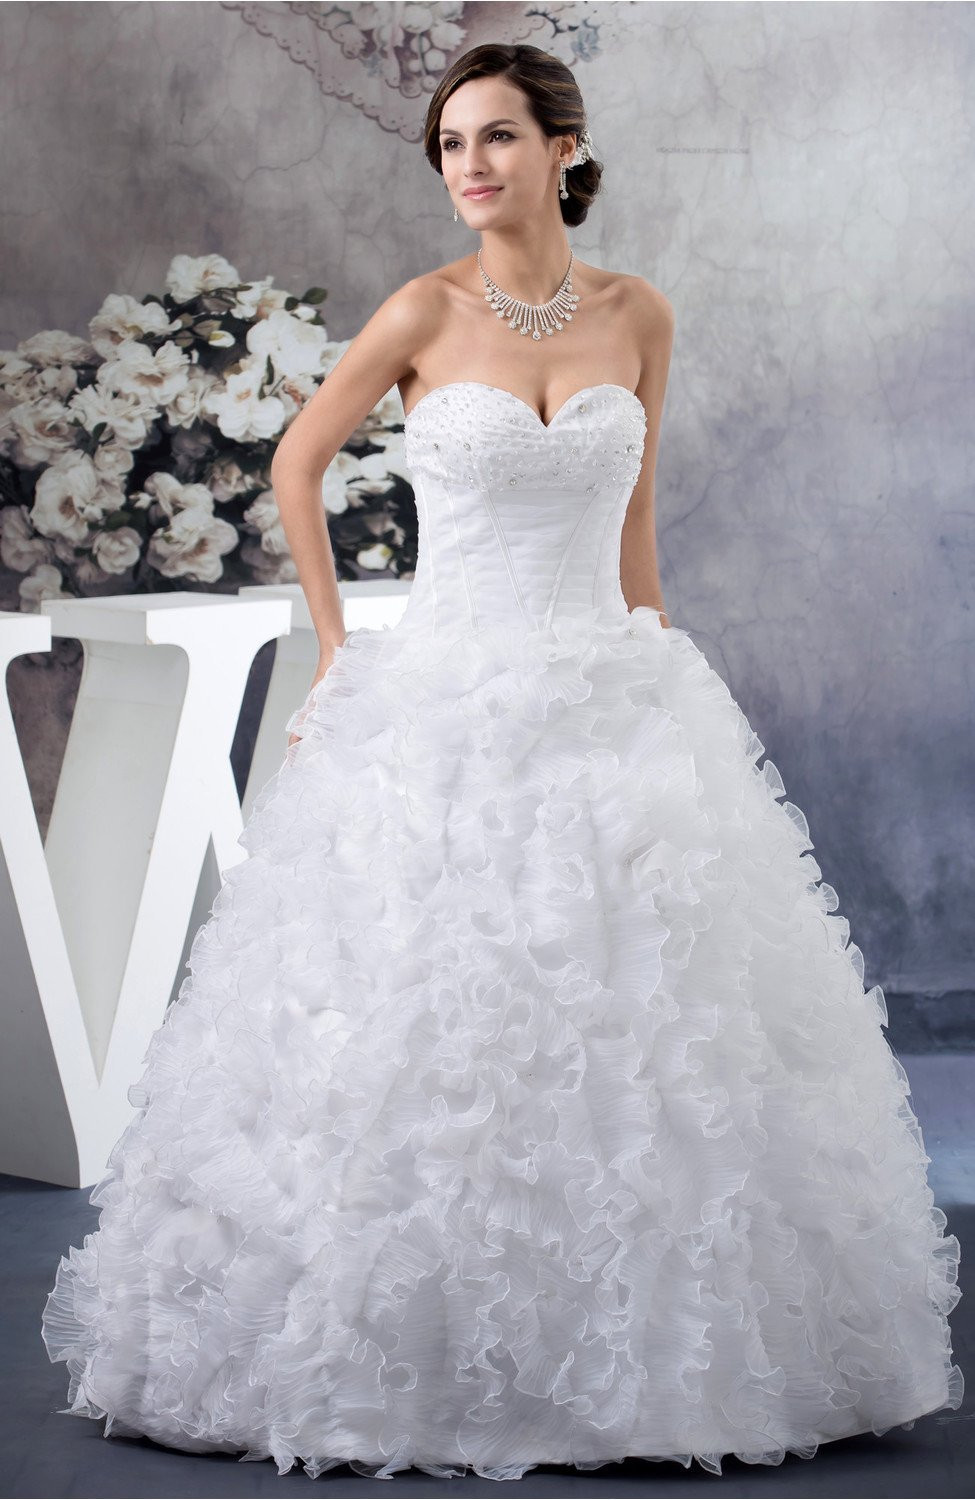 White Ball Gown Wedding Dresses
 White Ball Gown Wedding Dress Fall Expensive Gorgeous